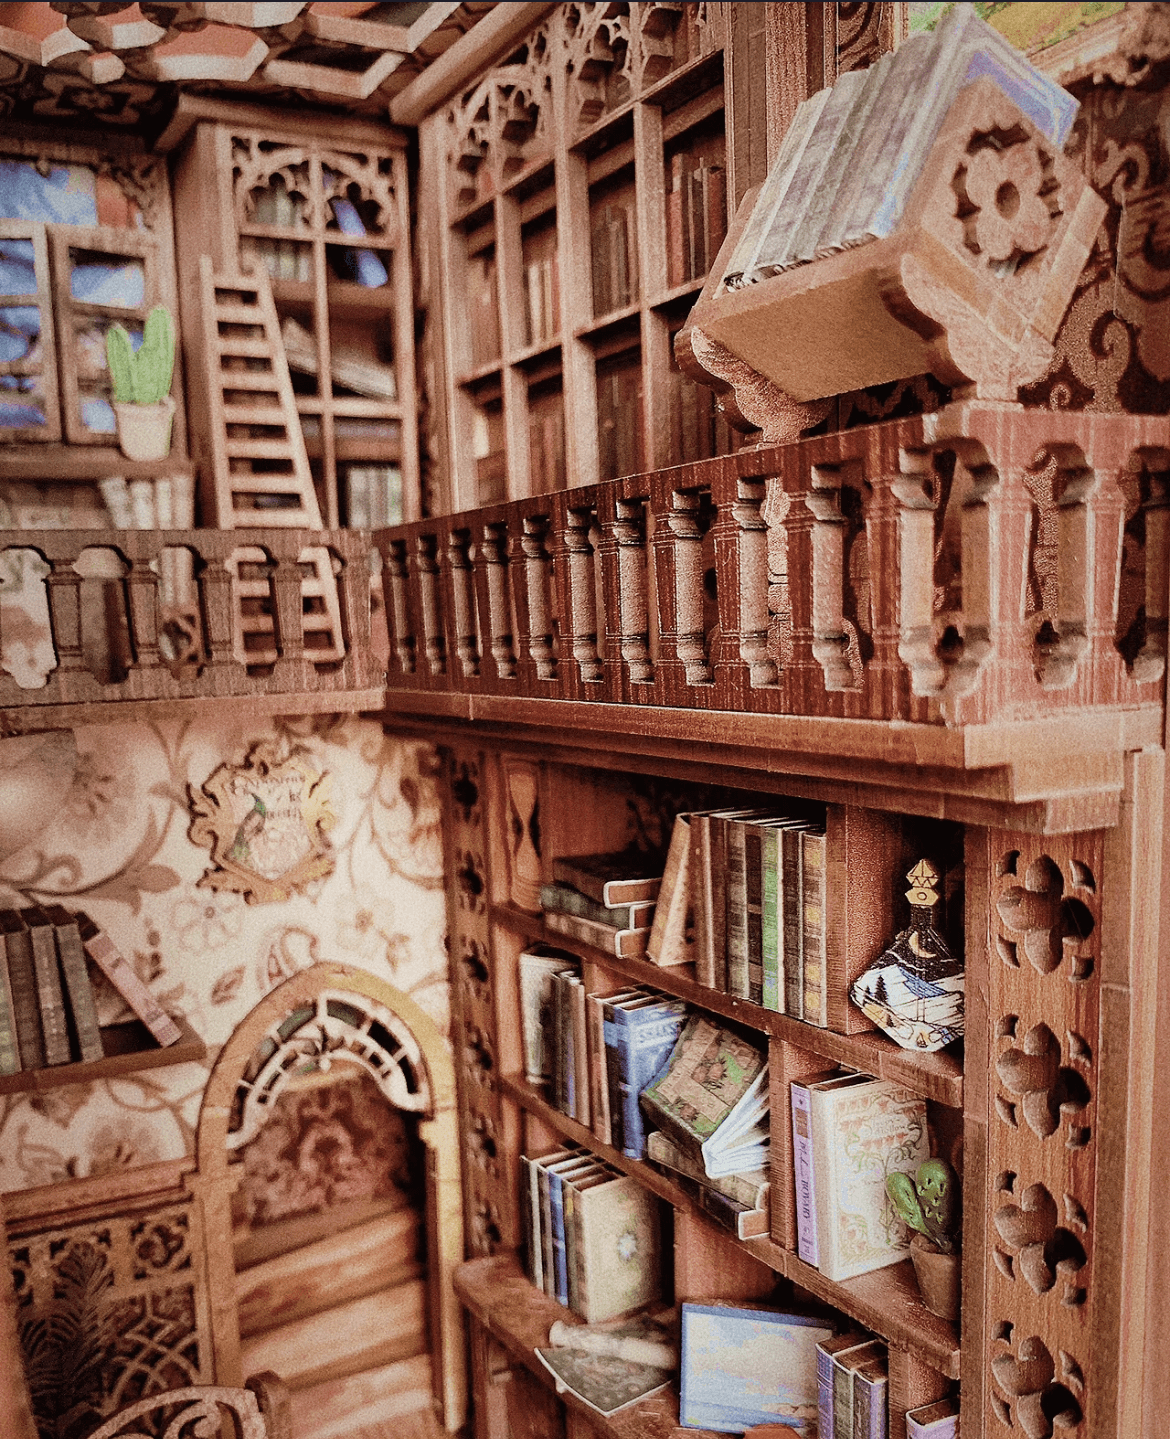 Eternal Bookstore Book Nook | Anavrin